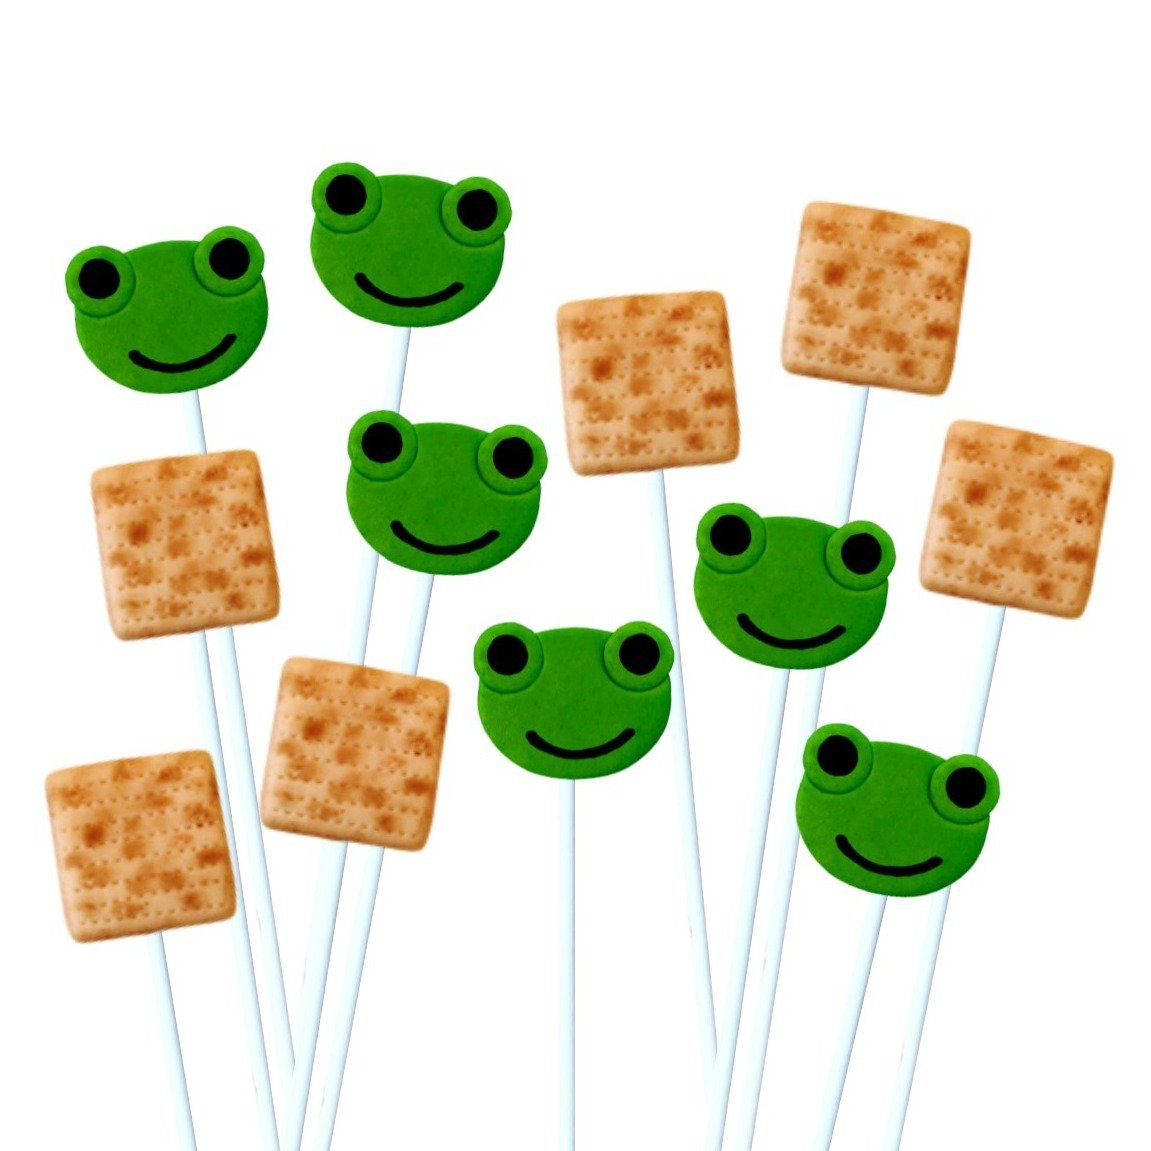 Marzipops Candy Matzah and Frog Marzipan Lollipops - Mix 'n' Match Set